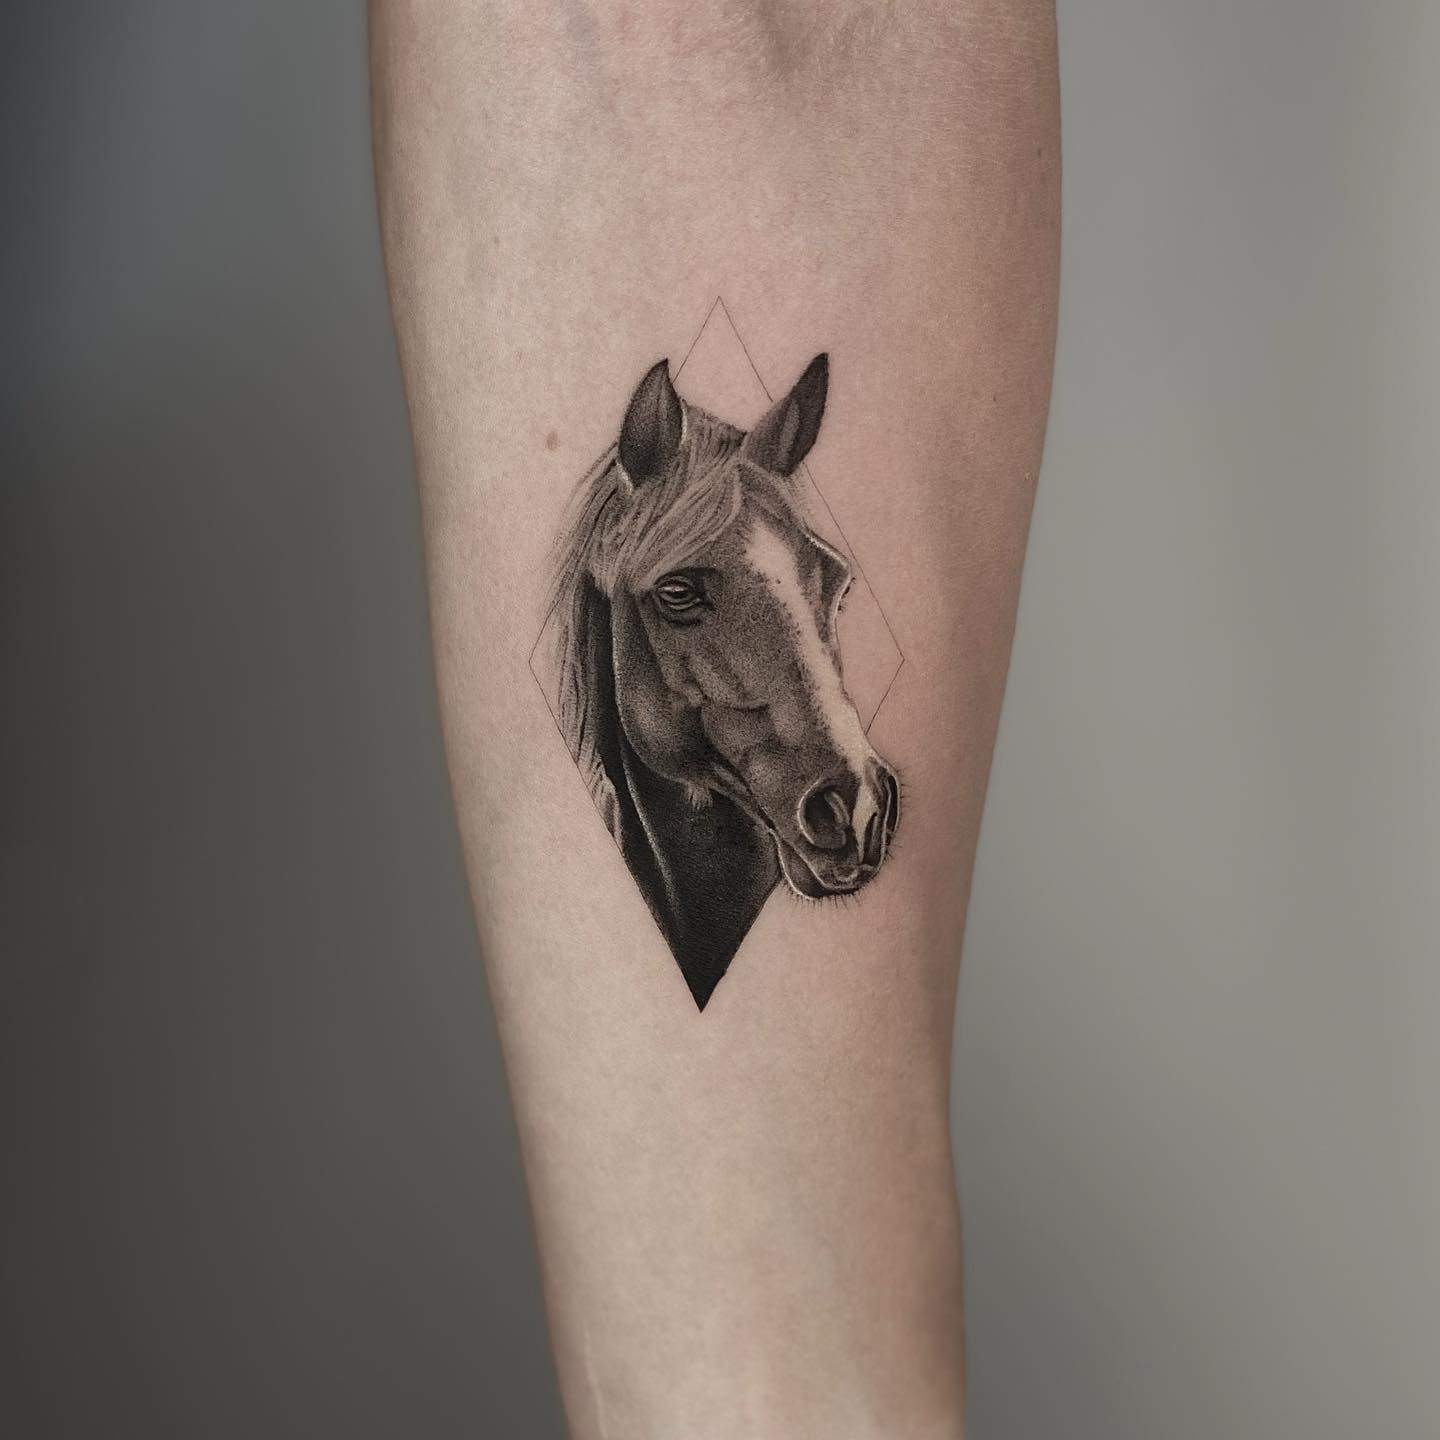 Illustration of horse head tattoo: fotos, imagens e ilustrações |  Shutterstock